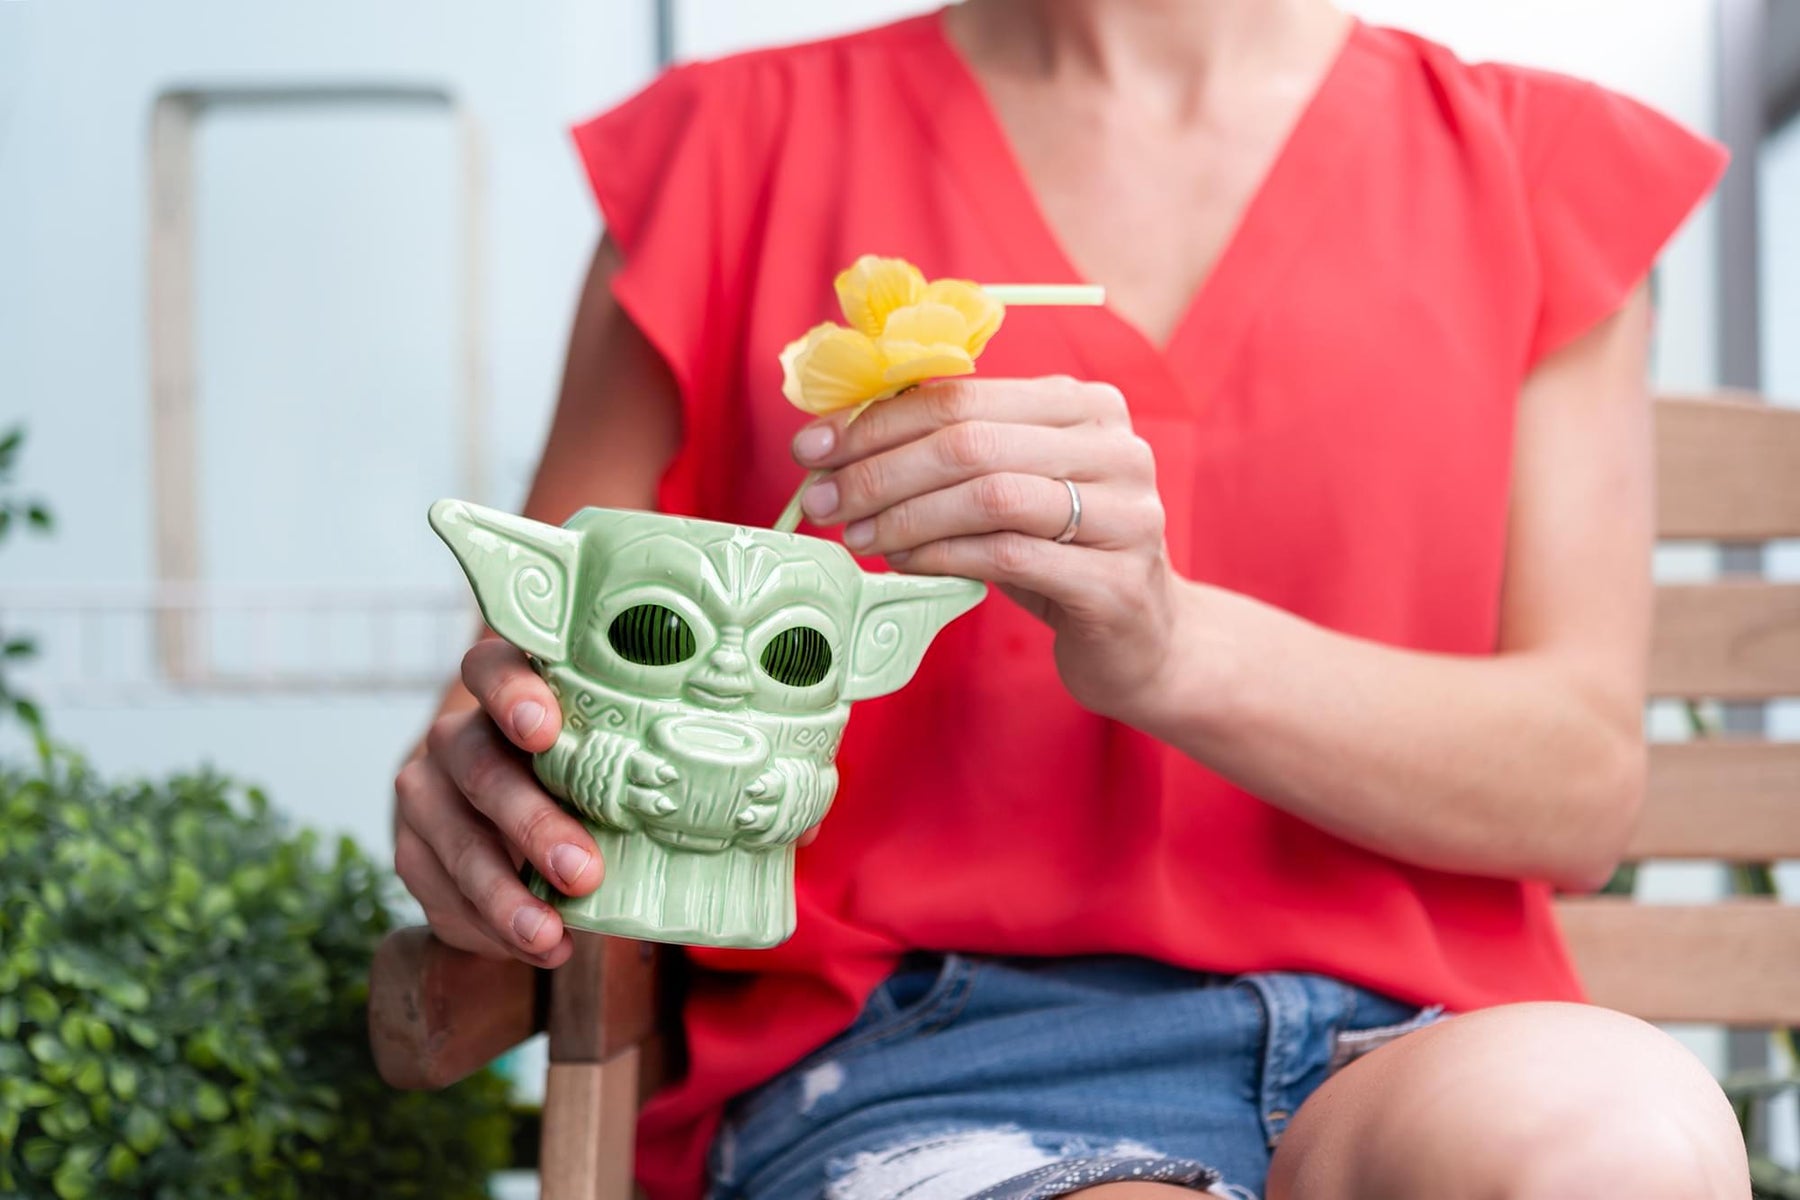 Geeki Tikis Star Wars: The Mandalorian The Child Baby Yoda Mug | 16 Ounces